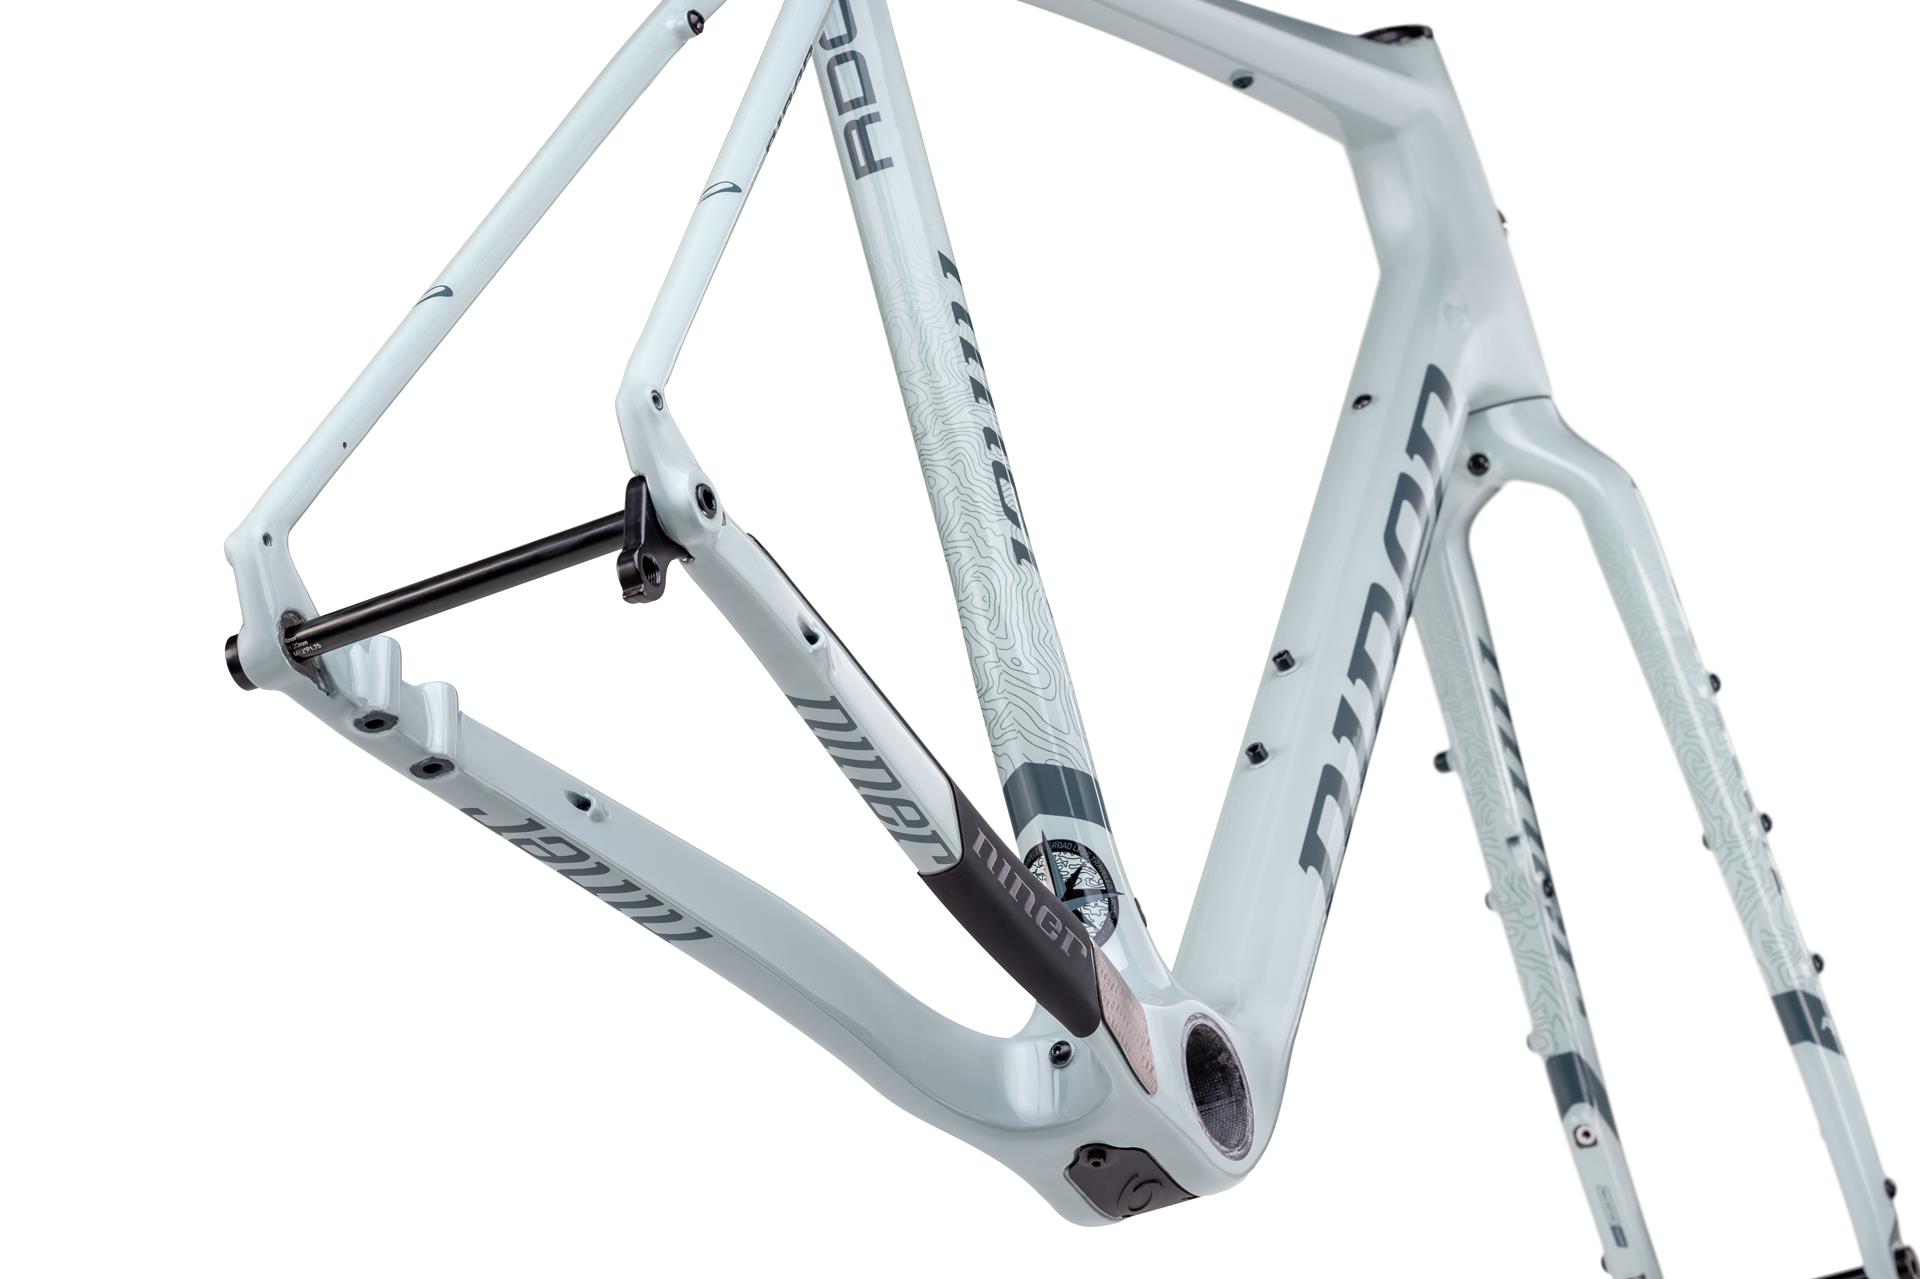 Niner RLT RDO 2-star велосипед, серый шифер, 56